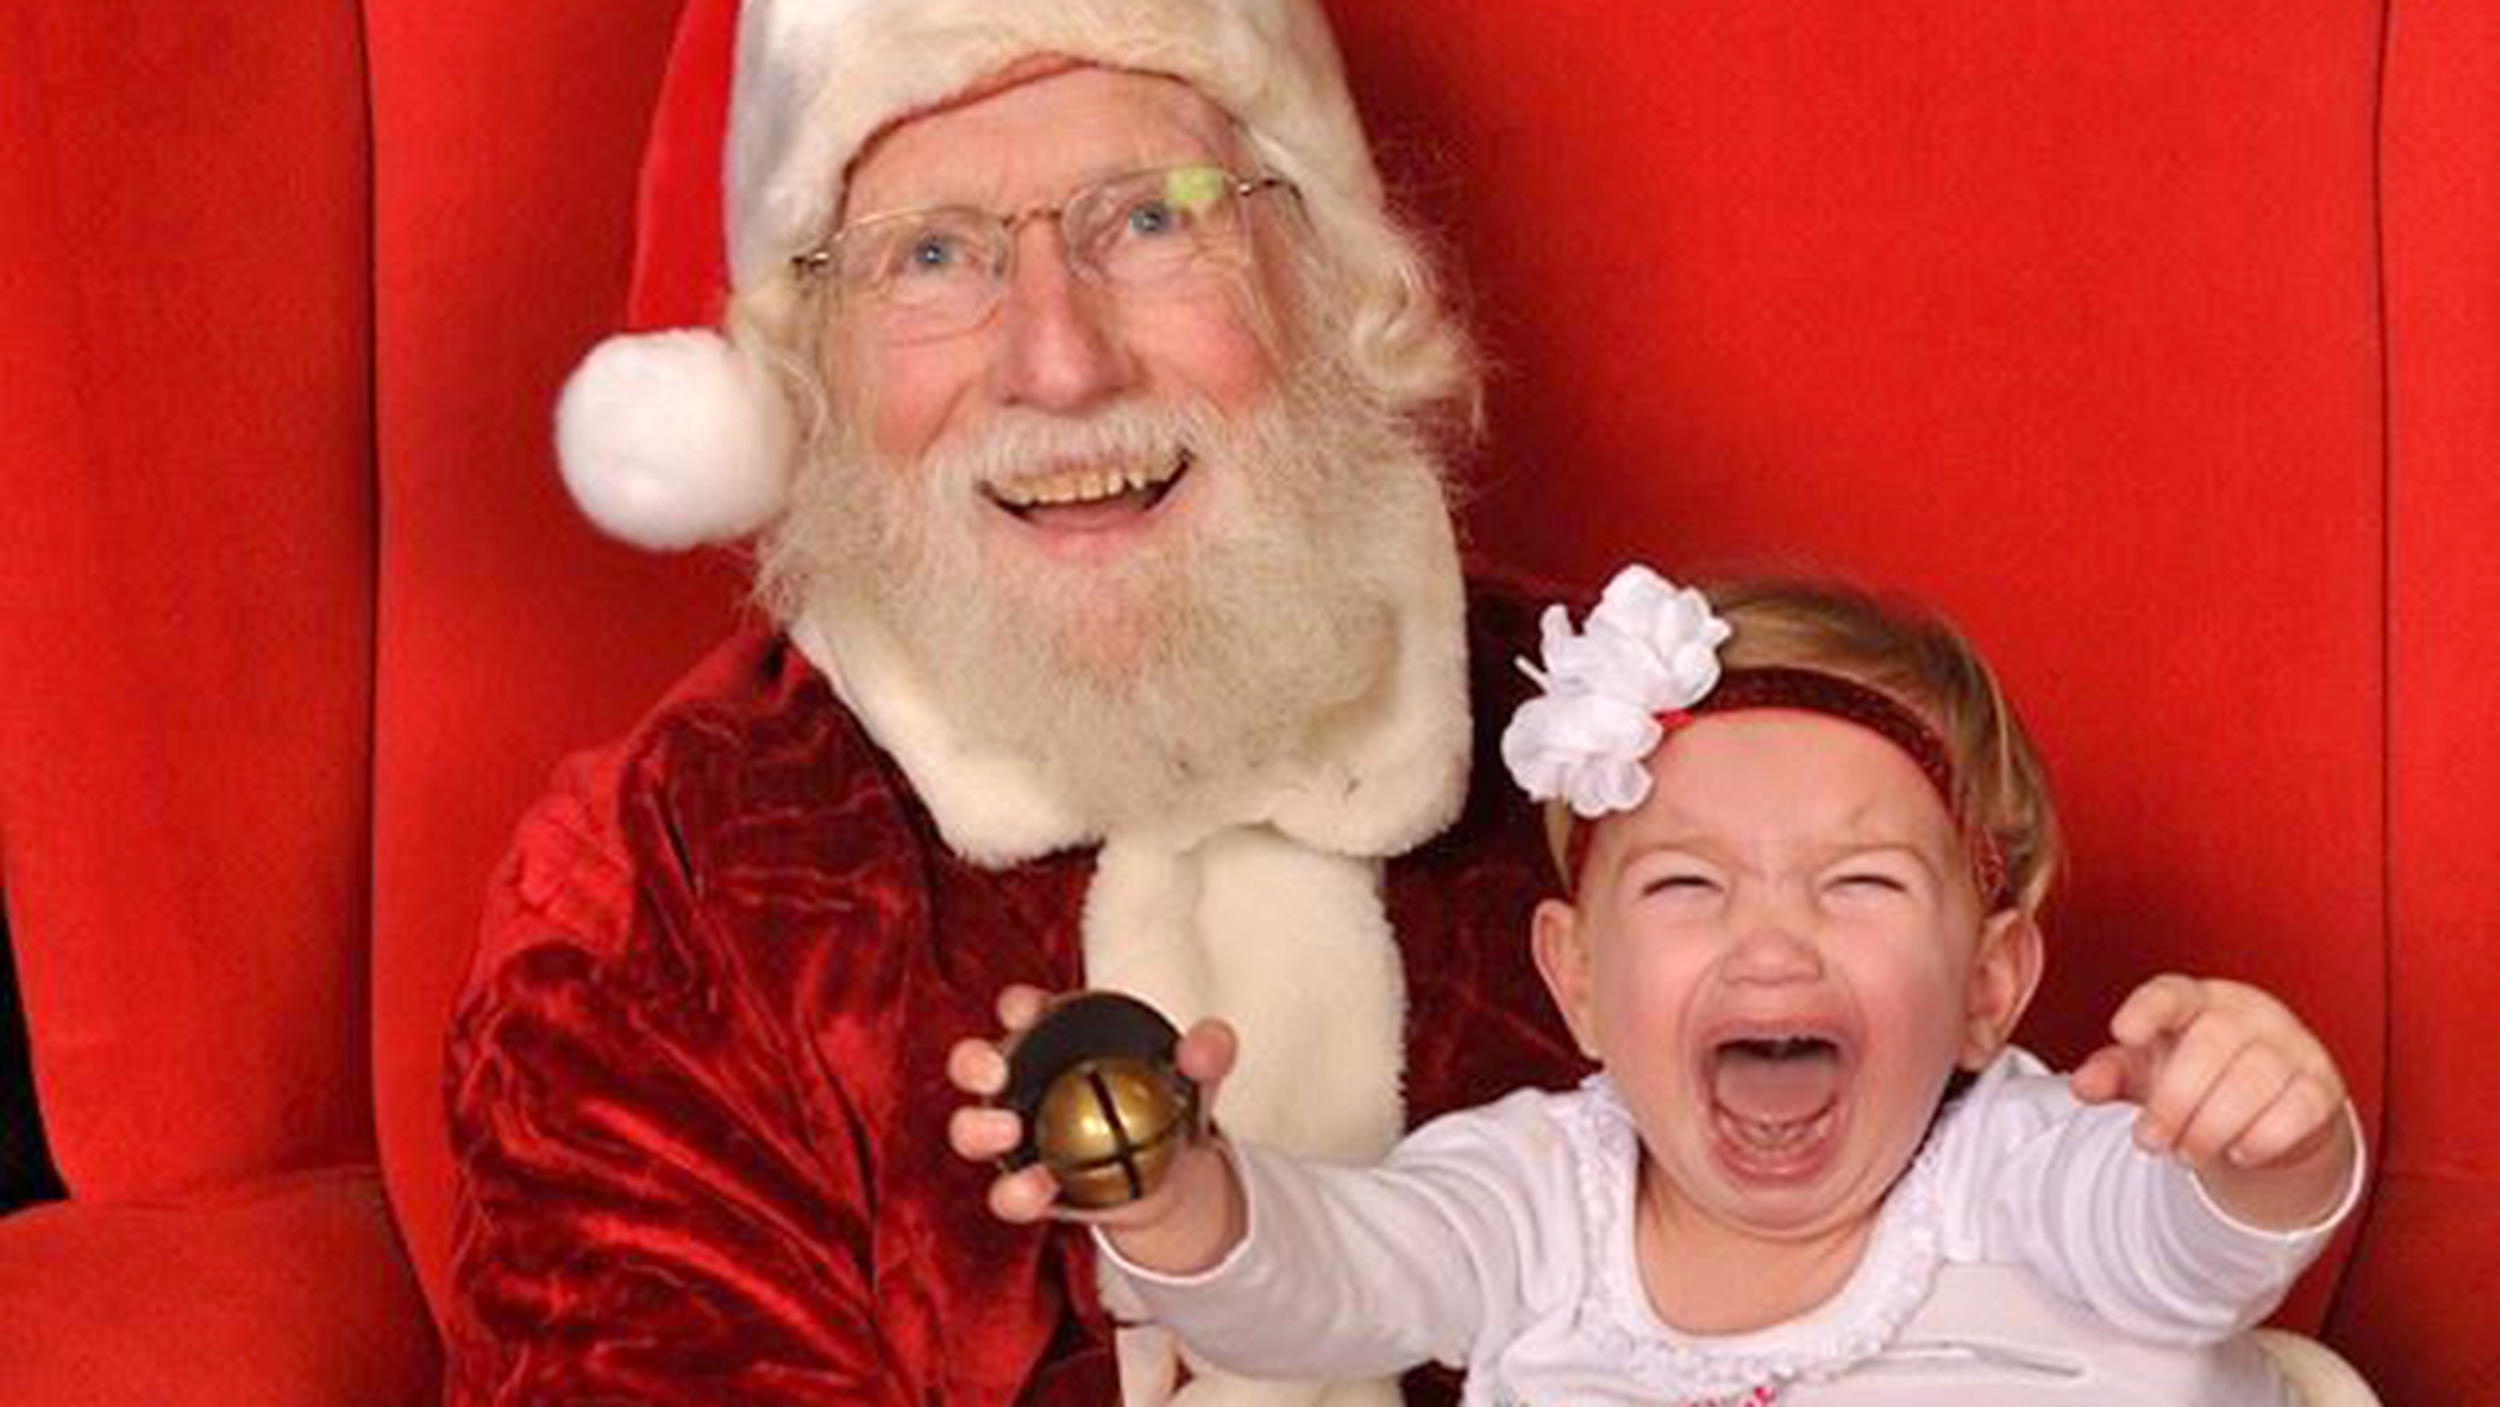 Kids scared of Santa: 15 photos of hilarious ho-ho-horror